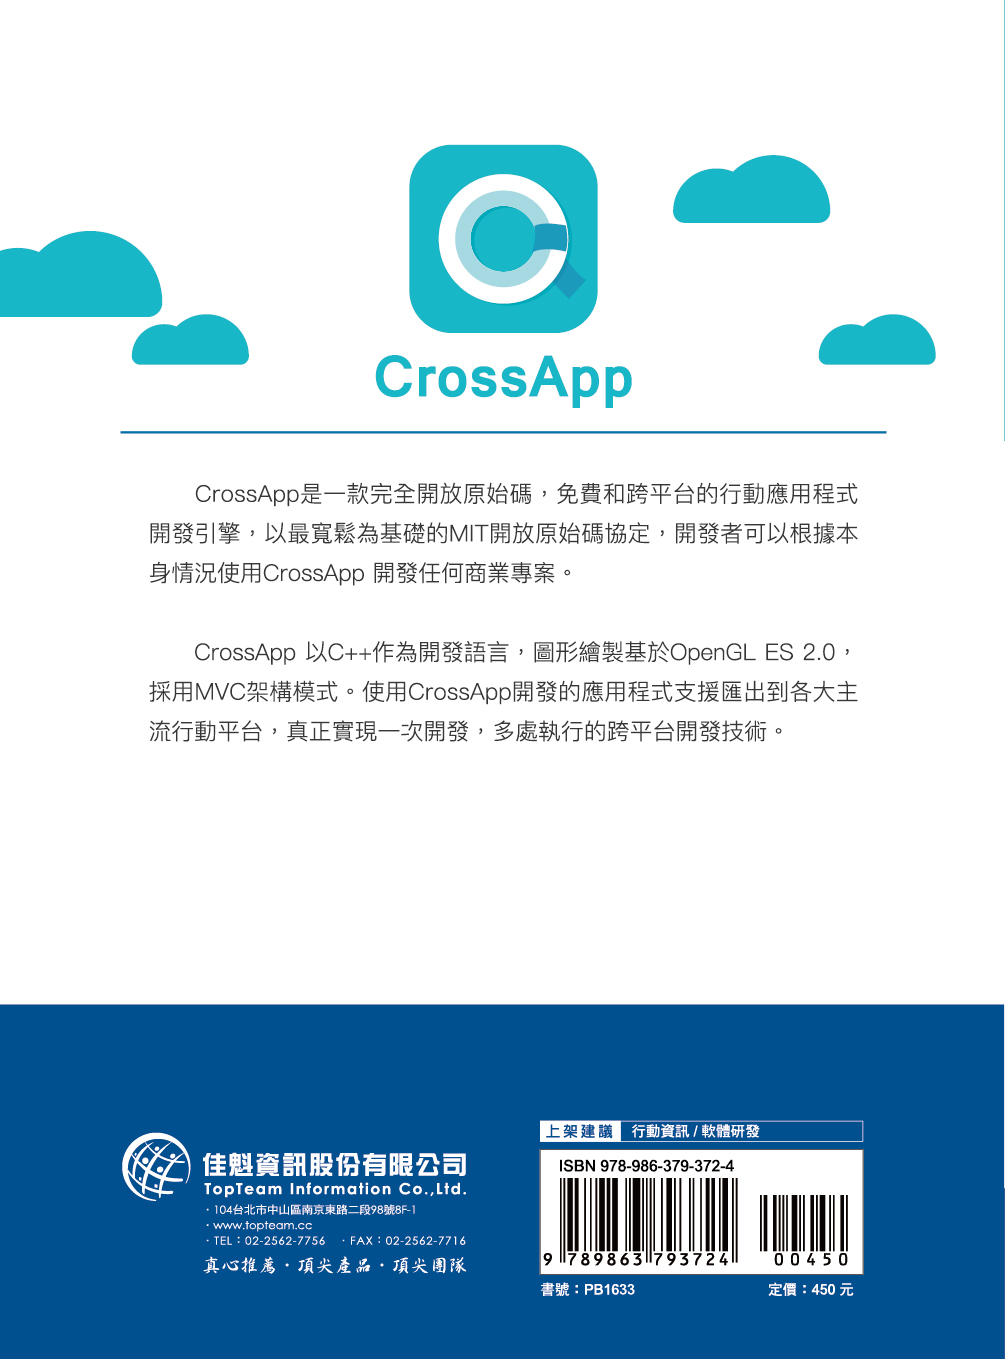 ►GO►最新優惠► 【書籍】中文世界也有跨App框架：CrossApp快速建立應用程式